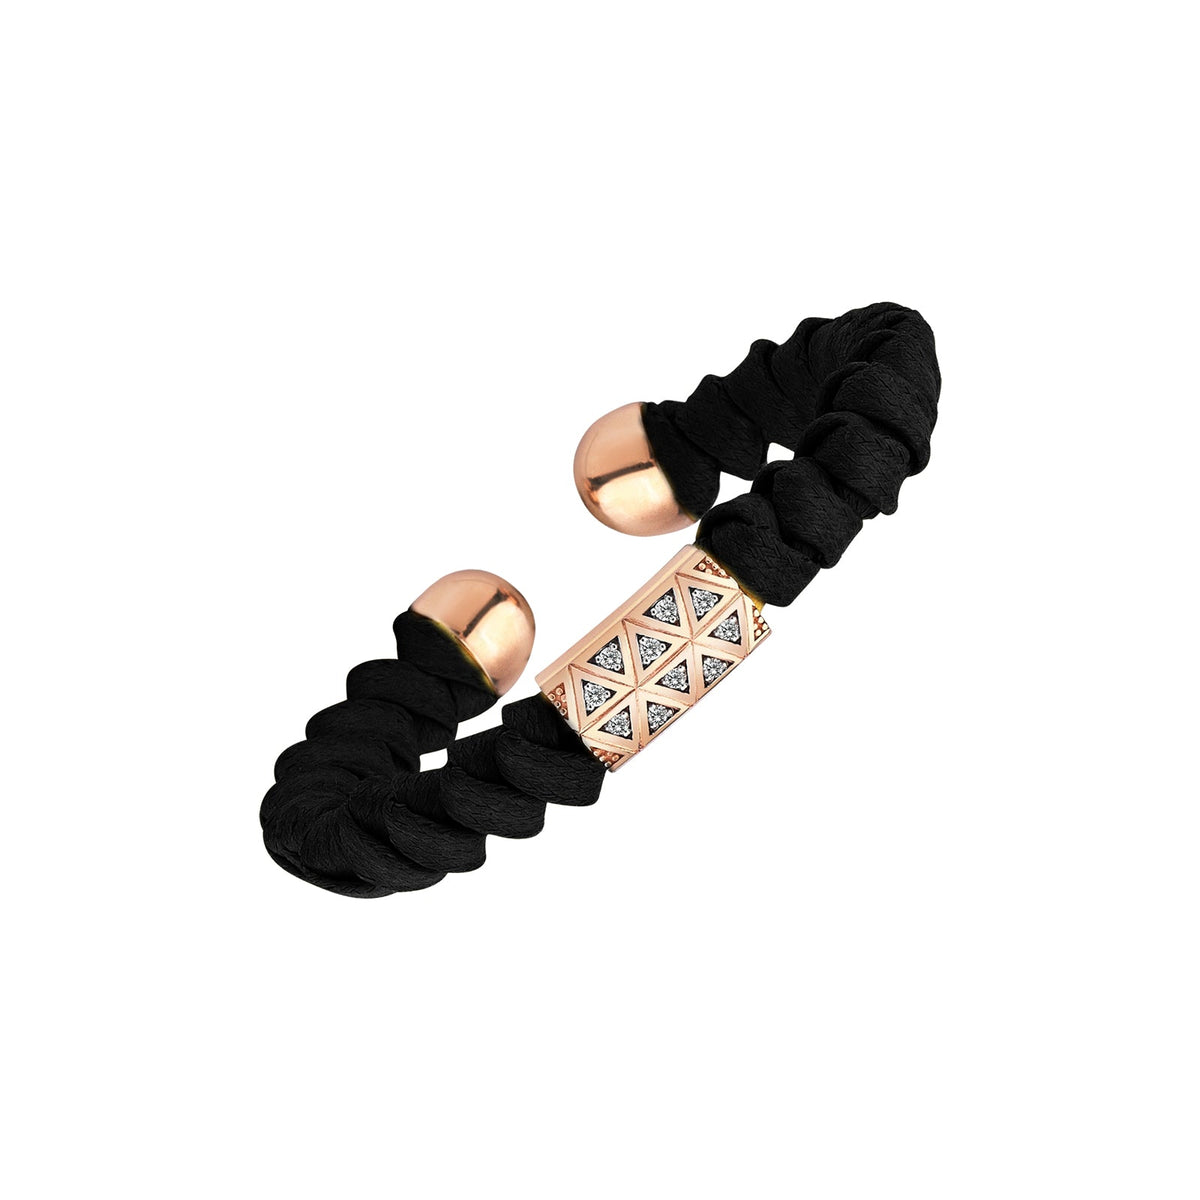 Cayman Cuff Bracelet - Kısmet by Milka Türkiye